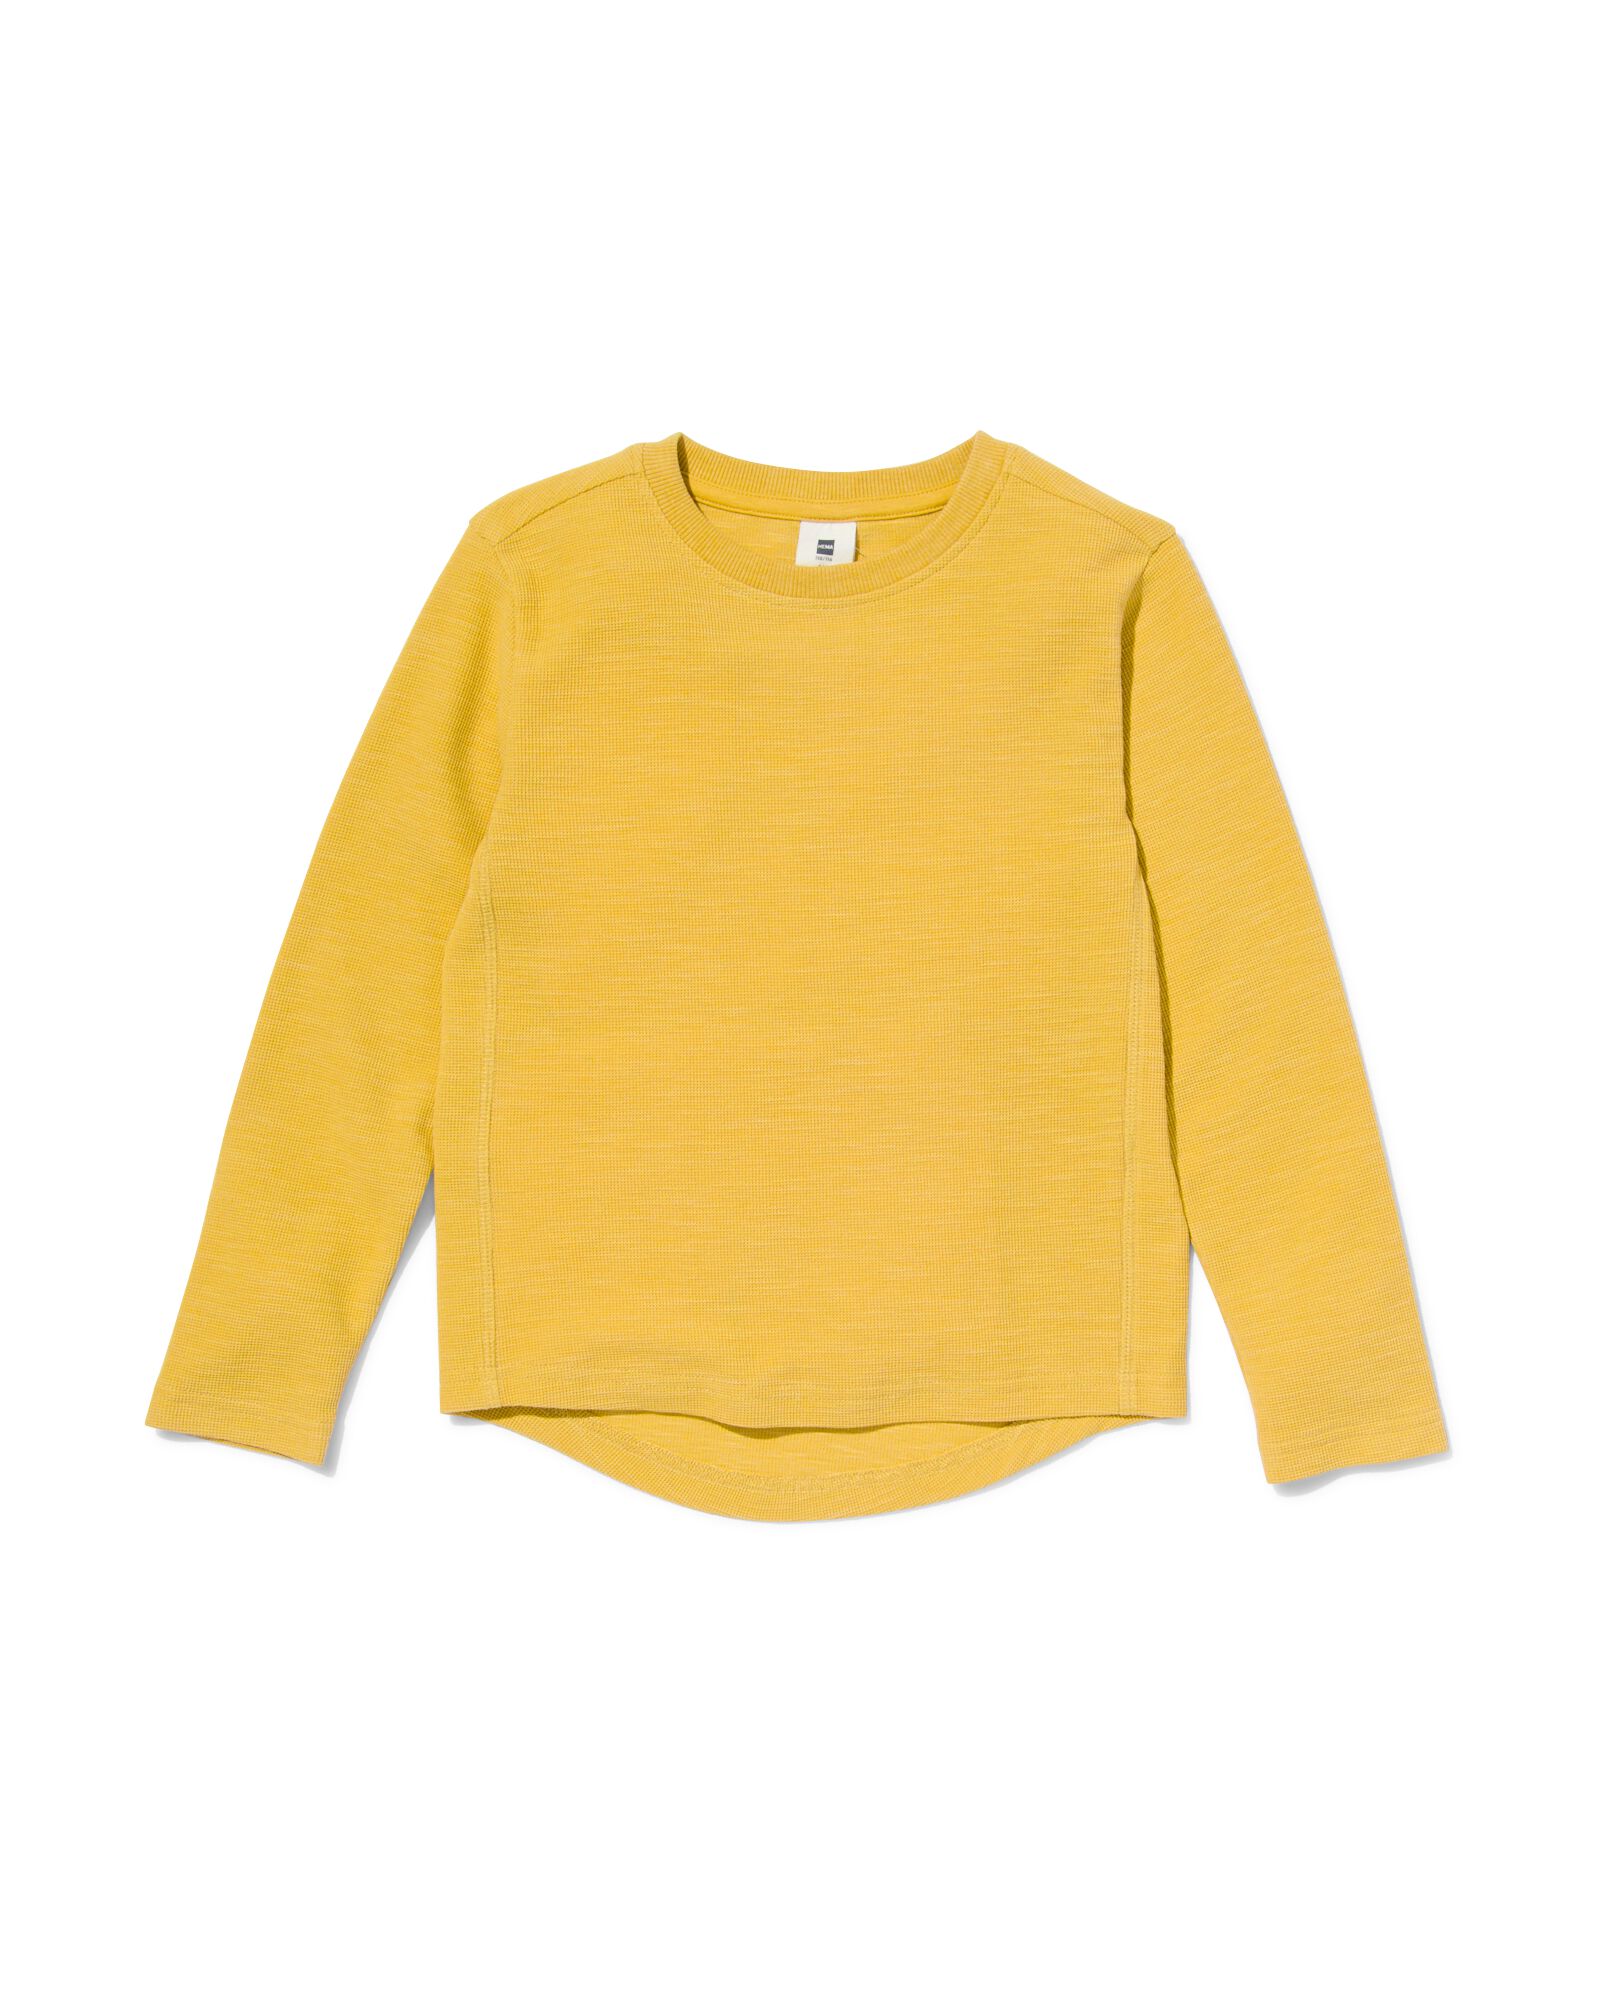 Kinder-Sweatshirt, Waffelstruktur gelb - HEMA